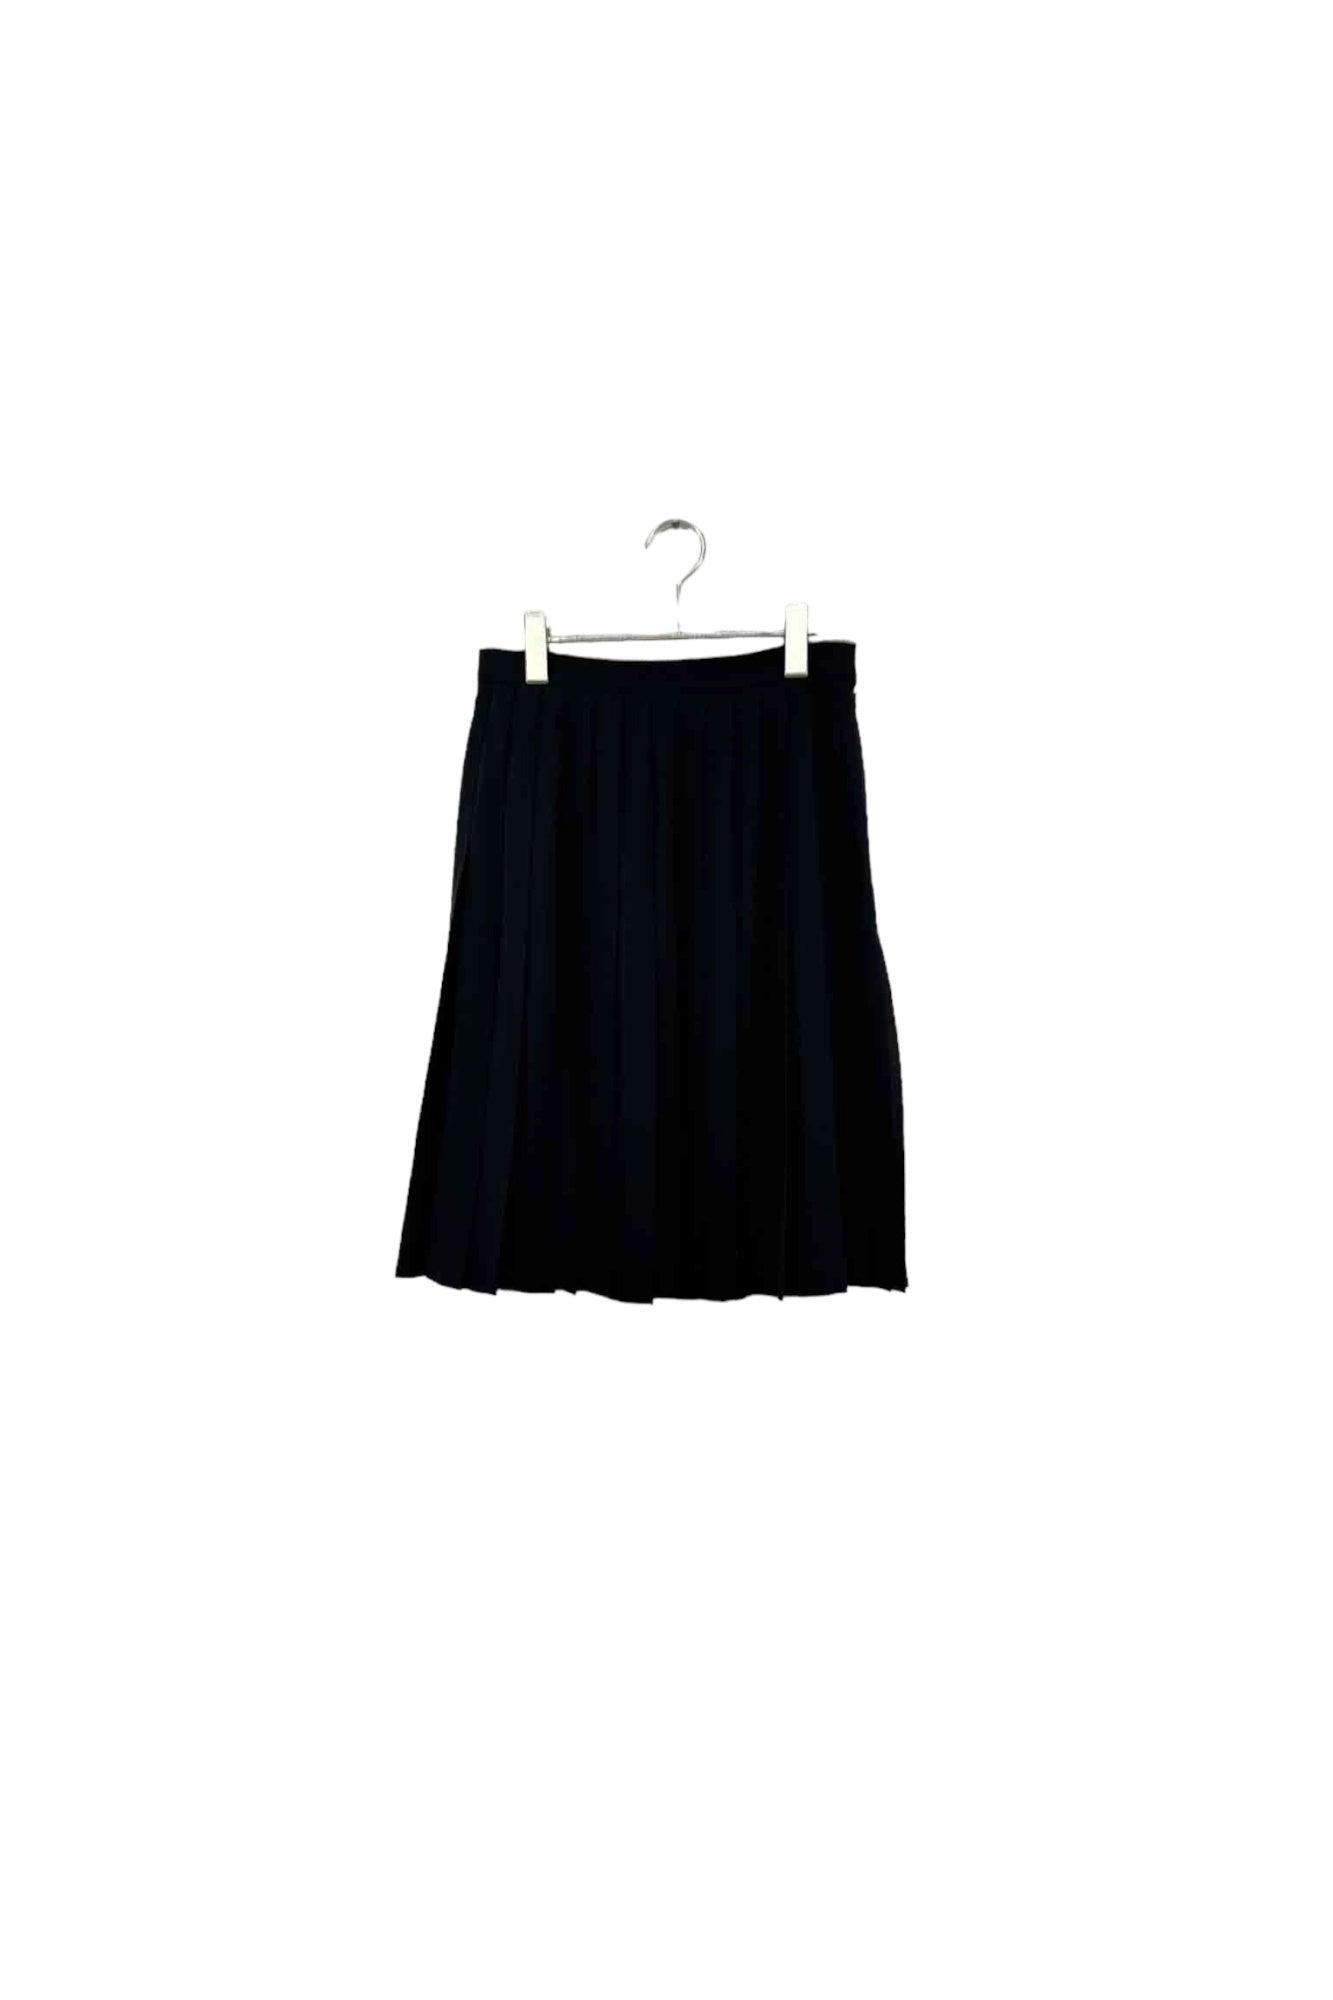 GIVENCHY HI FORMAL black pleats skirt